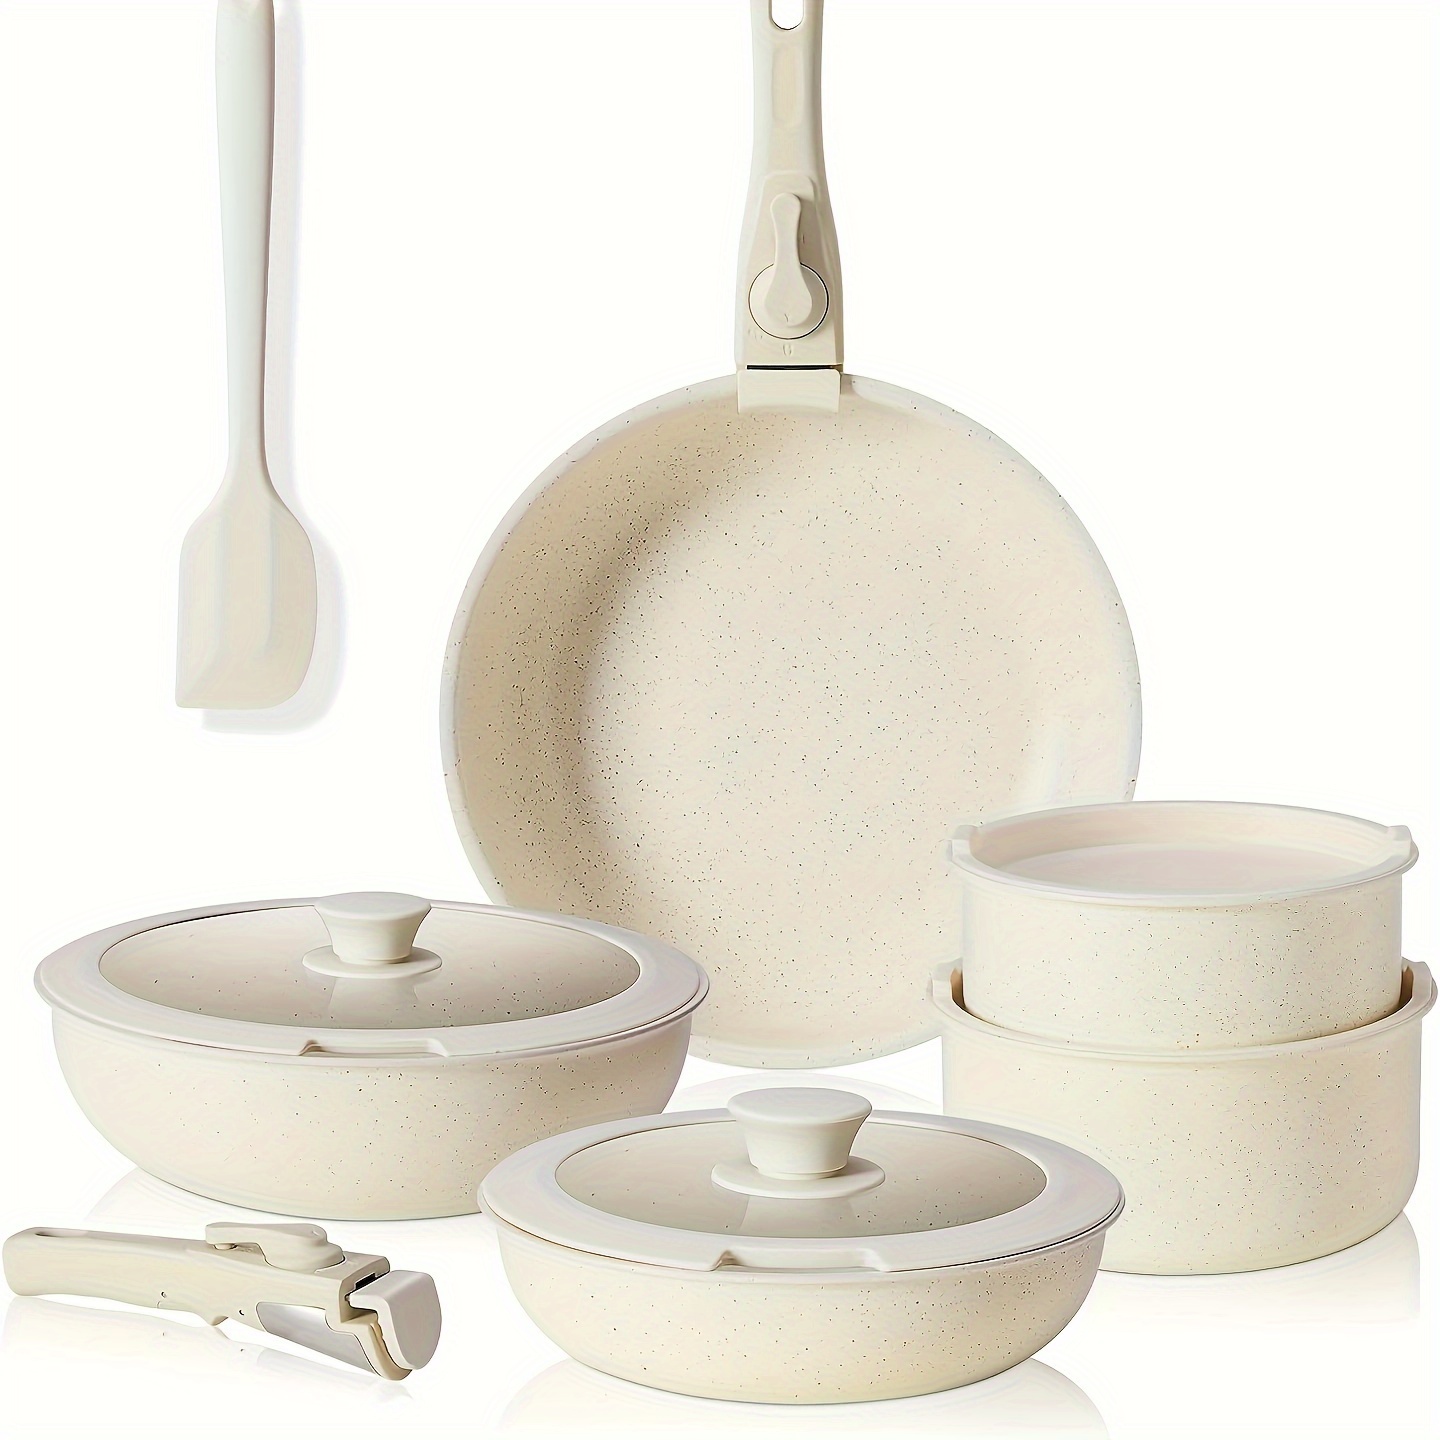 

12 Pcs Pots And Pans Set, Nonstick Kitchen Cookware Set With Detachable Handle, Induction Cookware, Dishwasher Oven Safe